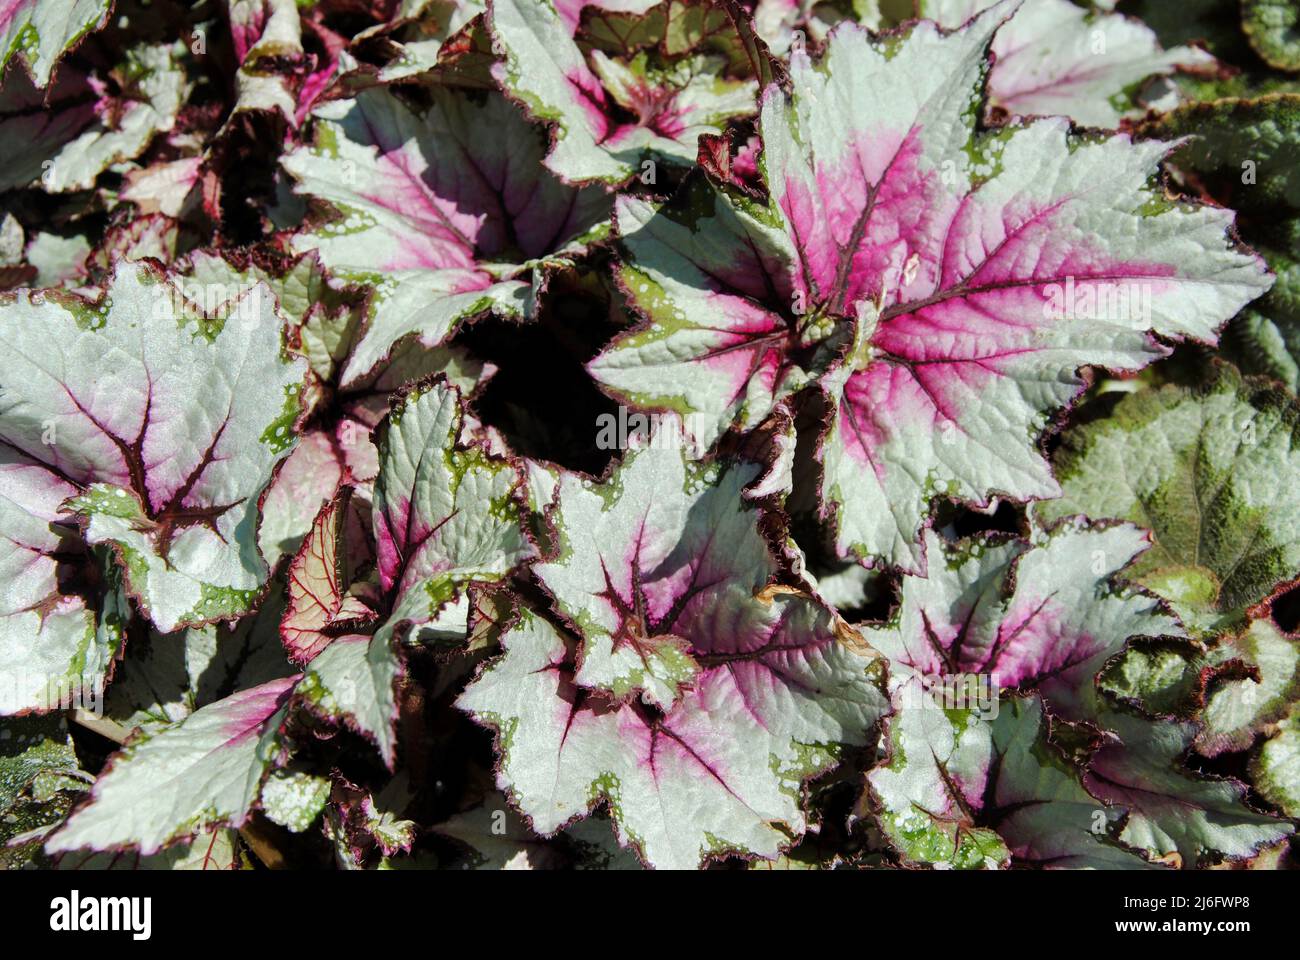 Decorative dark grey-green and purple caladium leaves Stock Photo